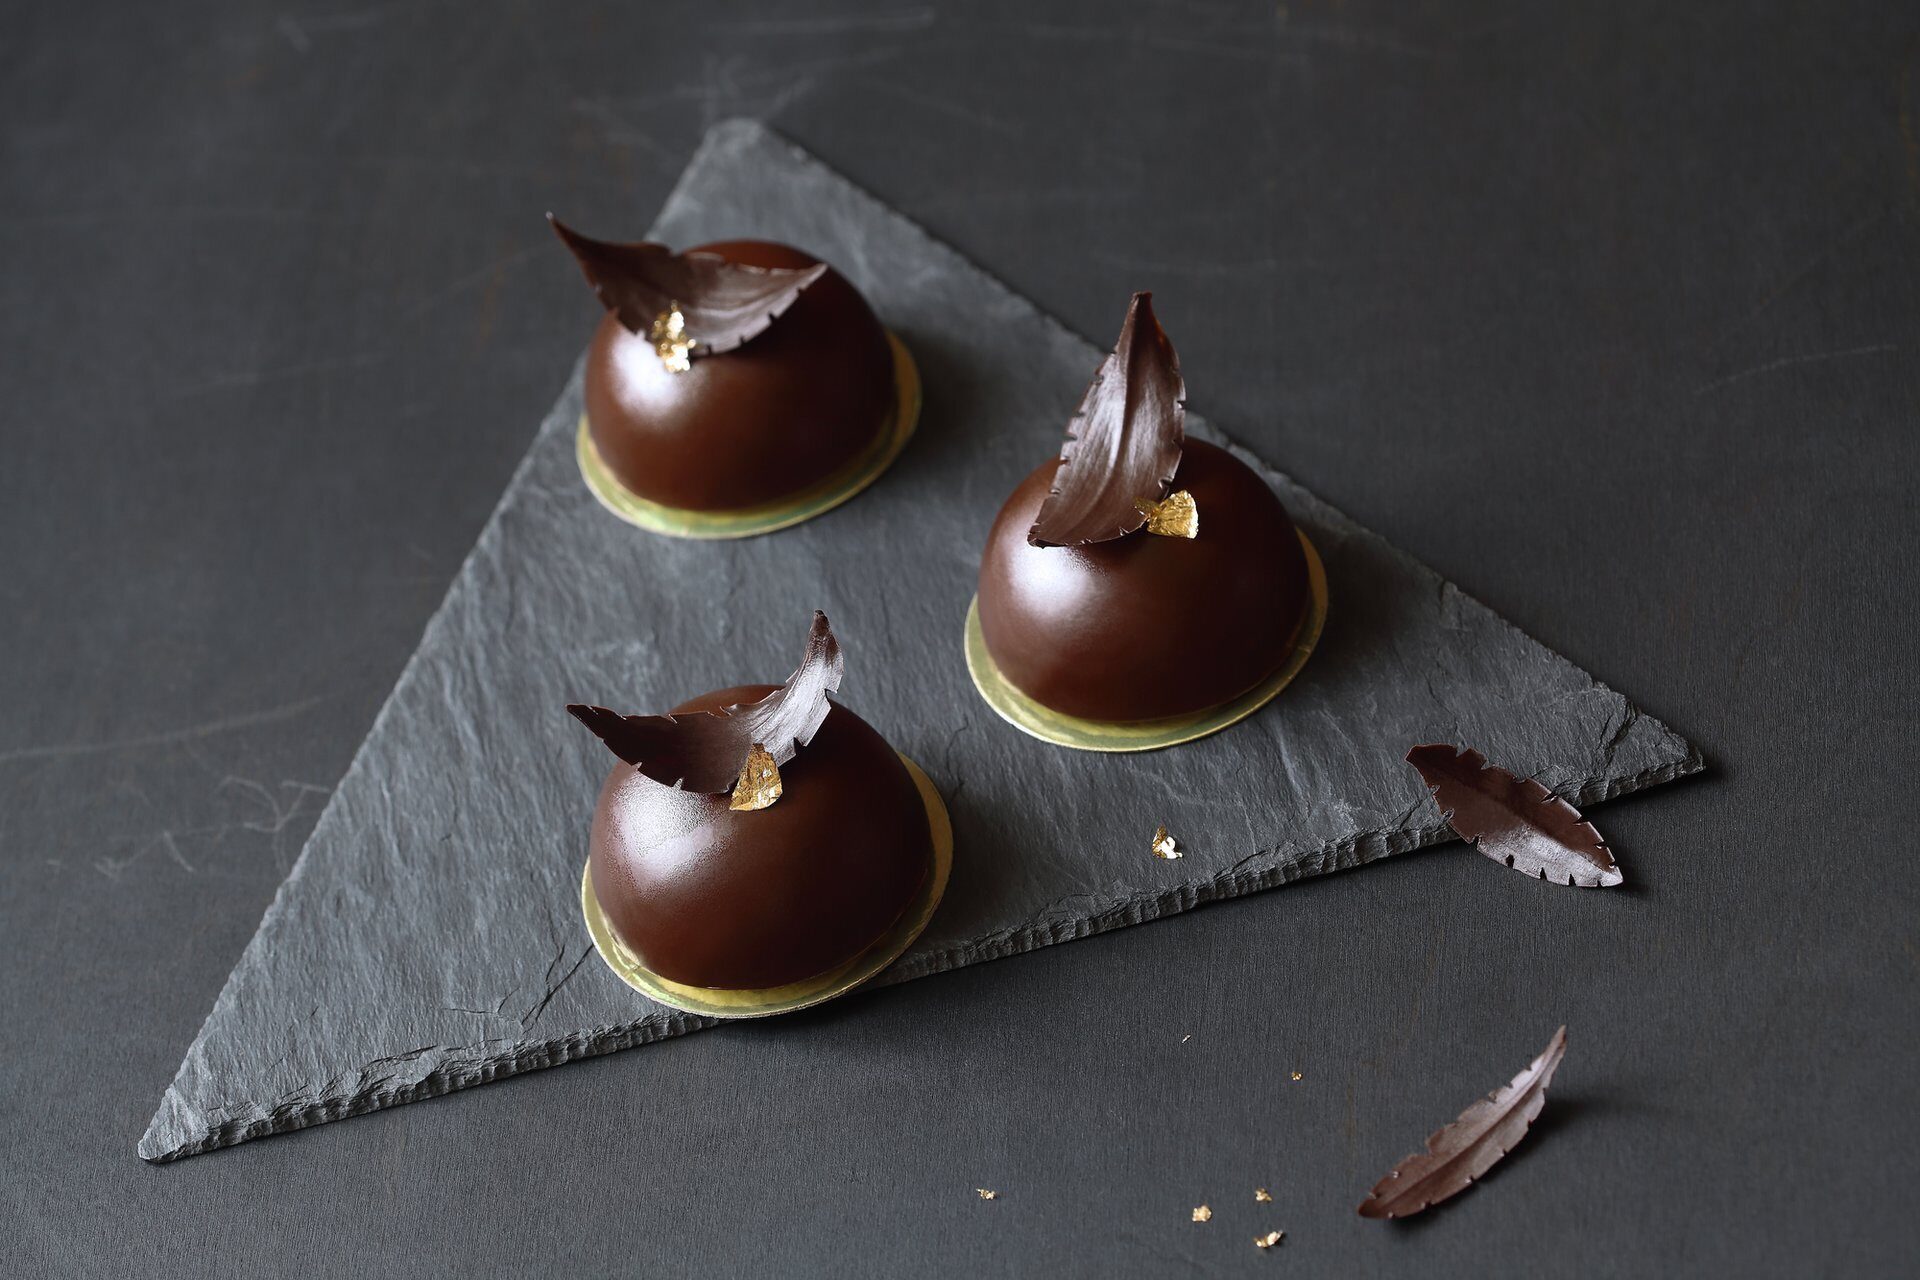 Шоколад Callebaut